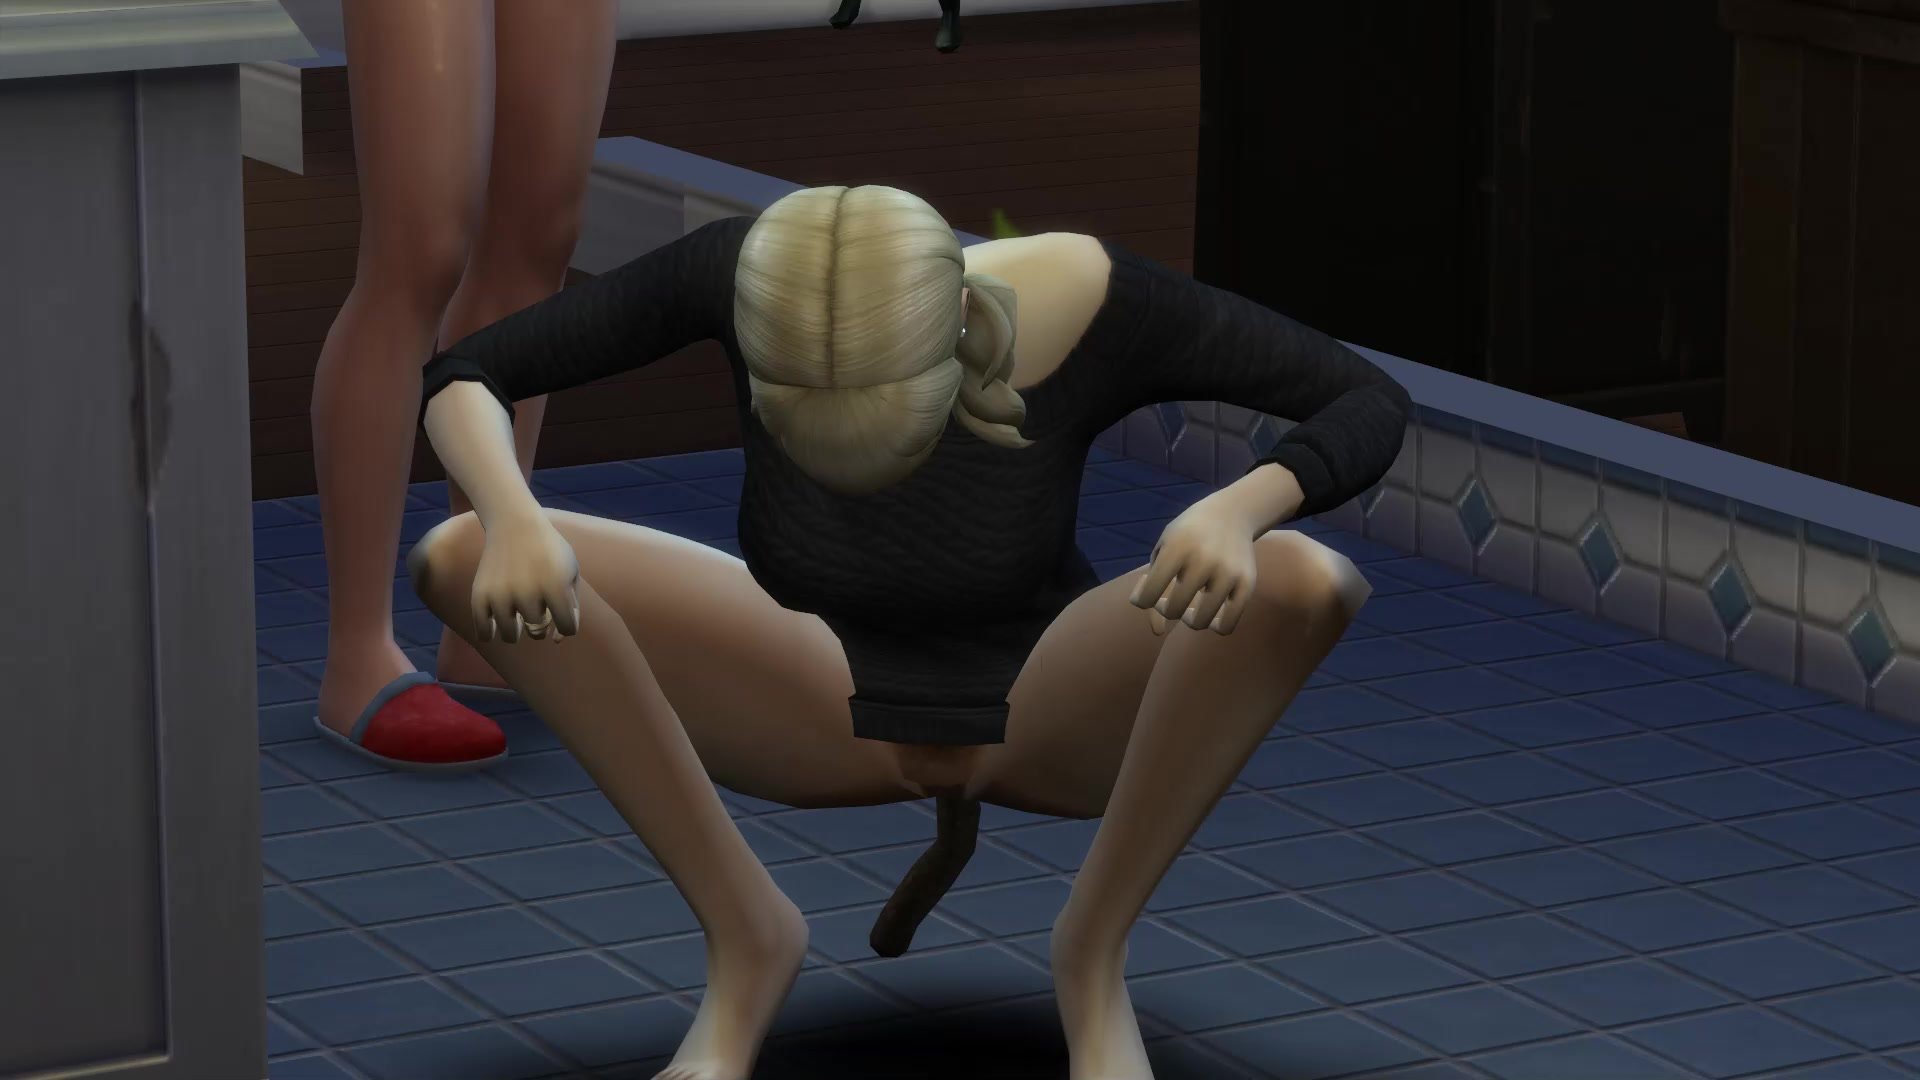 Sims 4: Порно мультики и хентай видео онлайн